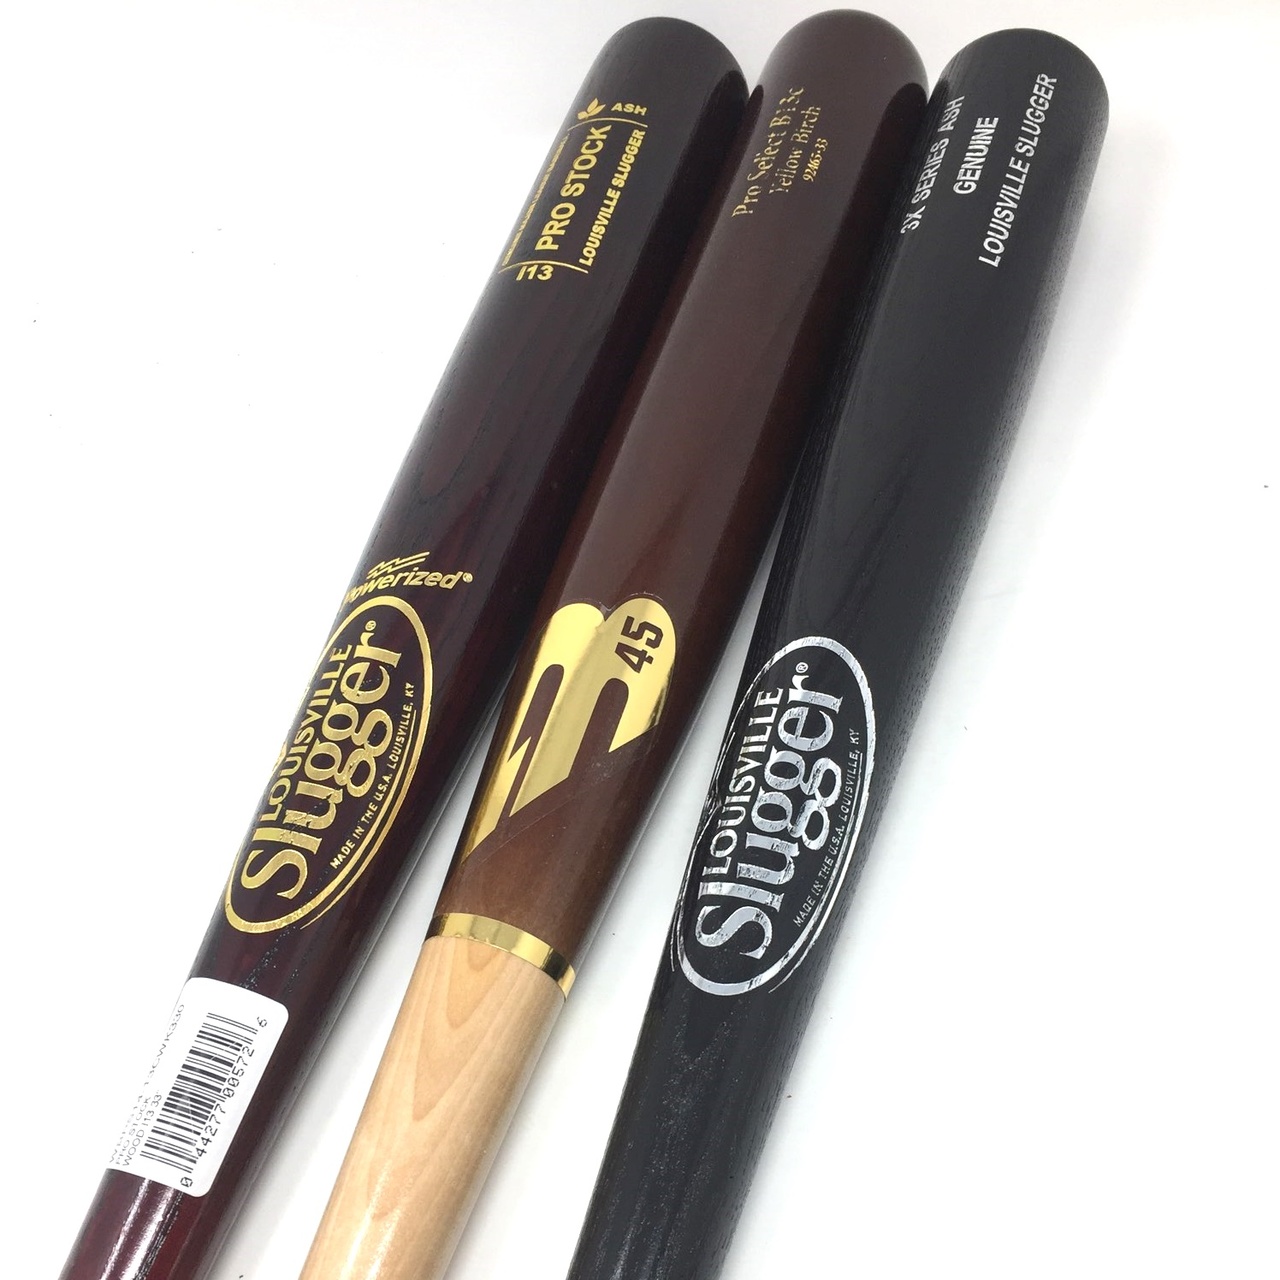 wood-baseball-bat-pack-33-inch-3-bats-b45-birch-maple-ash BATPACK-0018  Does not apply <p>33 inch wood bats. 3 Bats in Total. 1 B45 Yellow